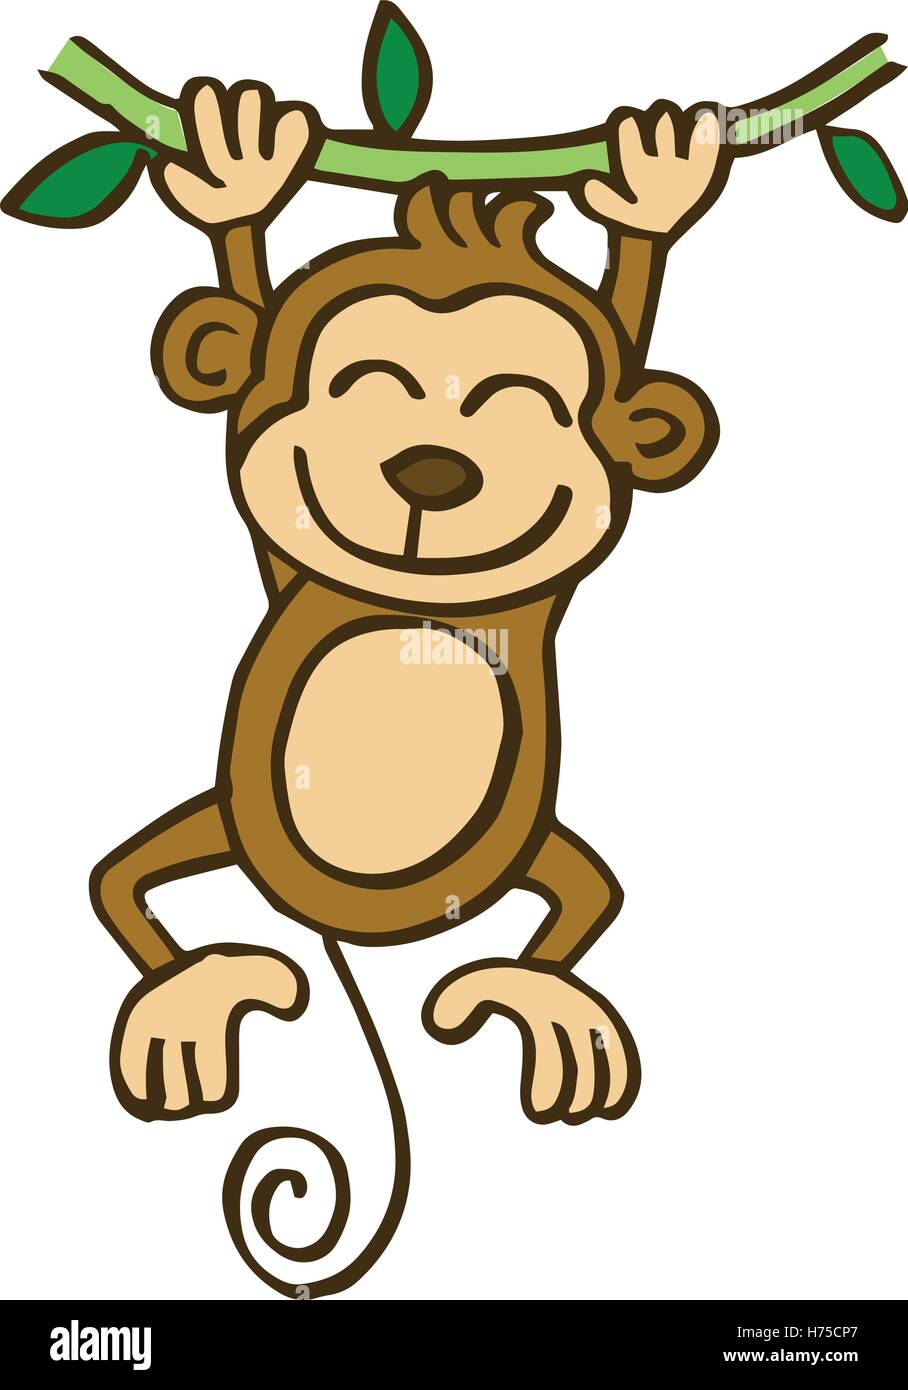 Swinging monkey cartoon for kids vector illustration Stock Vector ...